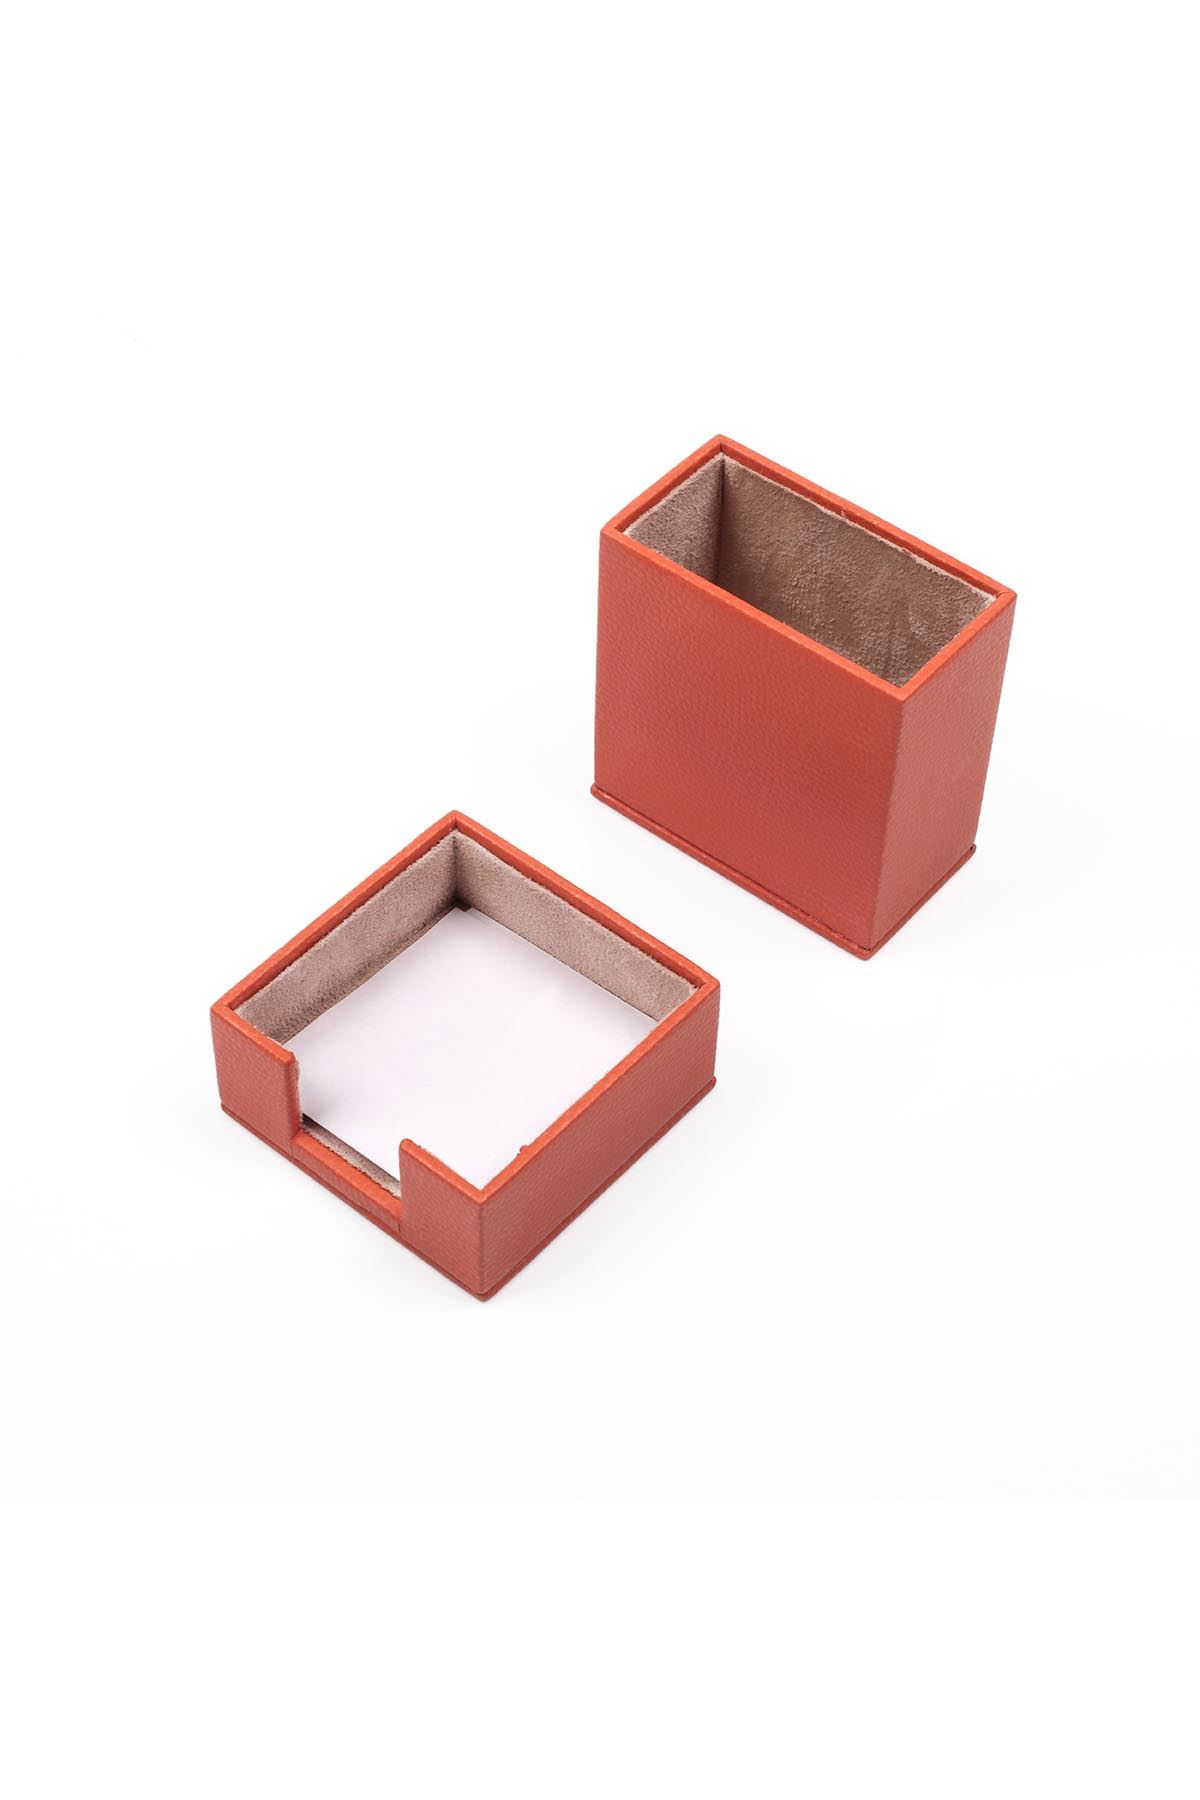 Leather Desk Accessories set of 2 Orange| Desk Set Accessories | Desktop Accessories | Desk Accessories | Desk Organizers